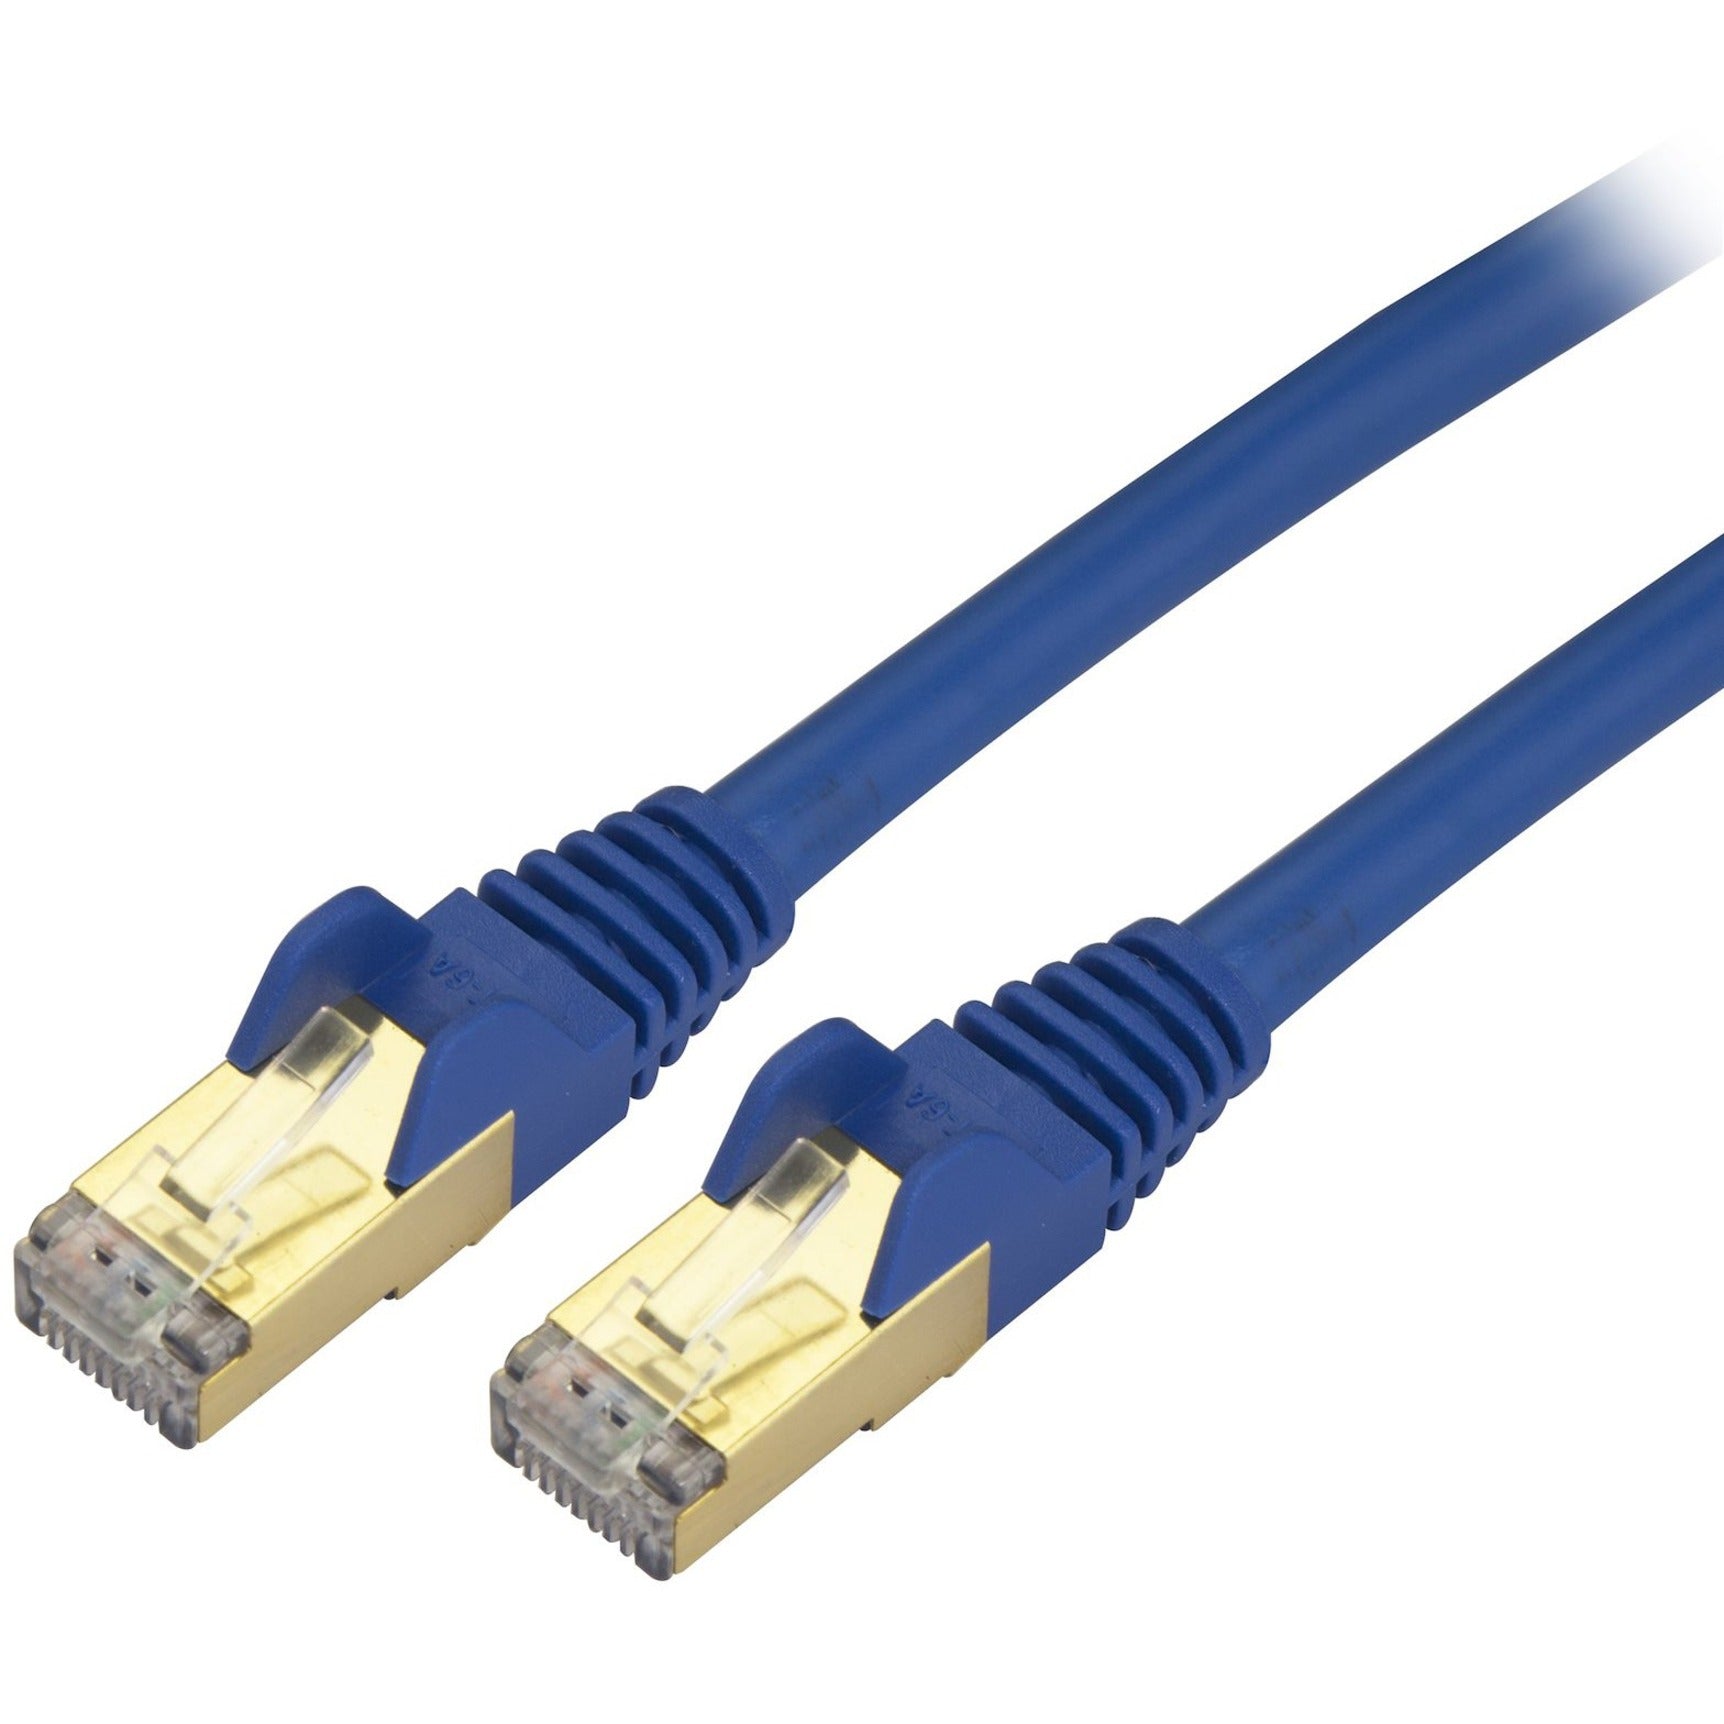 StarTech.com C6ASPAT5BL Cat6a Ethernet Patch Cable - Shielded (STP) - 5 ft., Blue, Snagless RJ45 Ethernet Cord